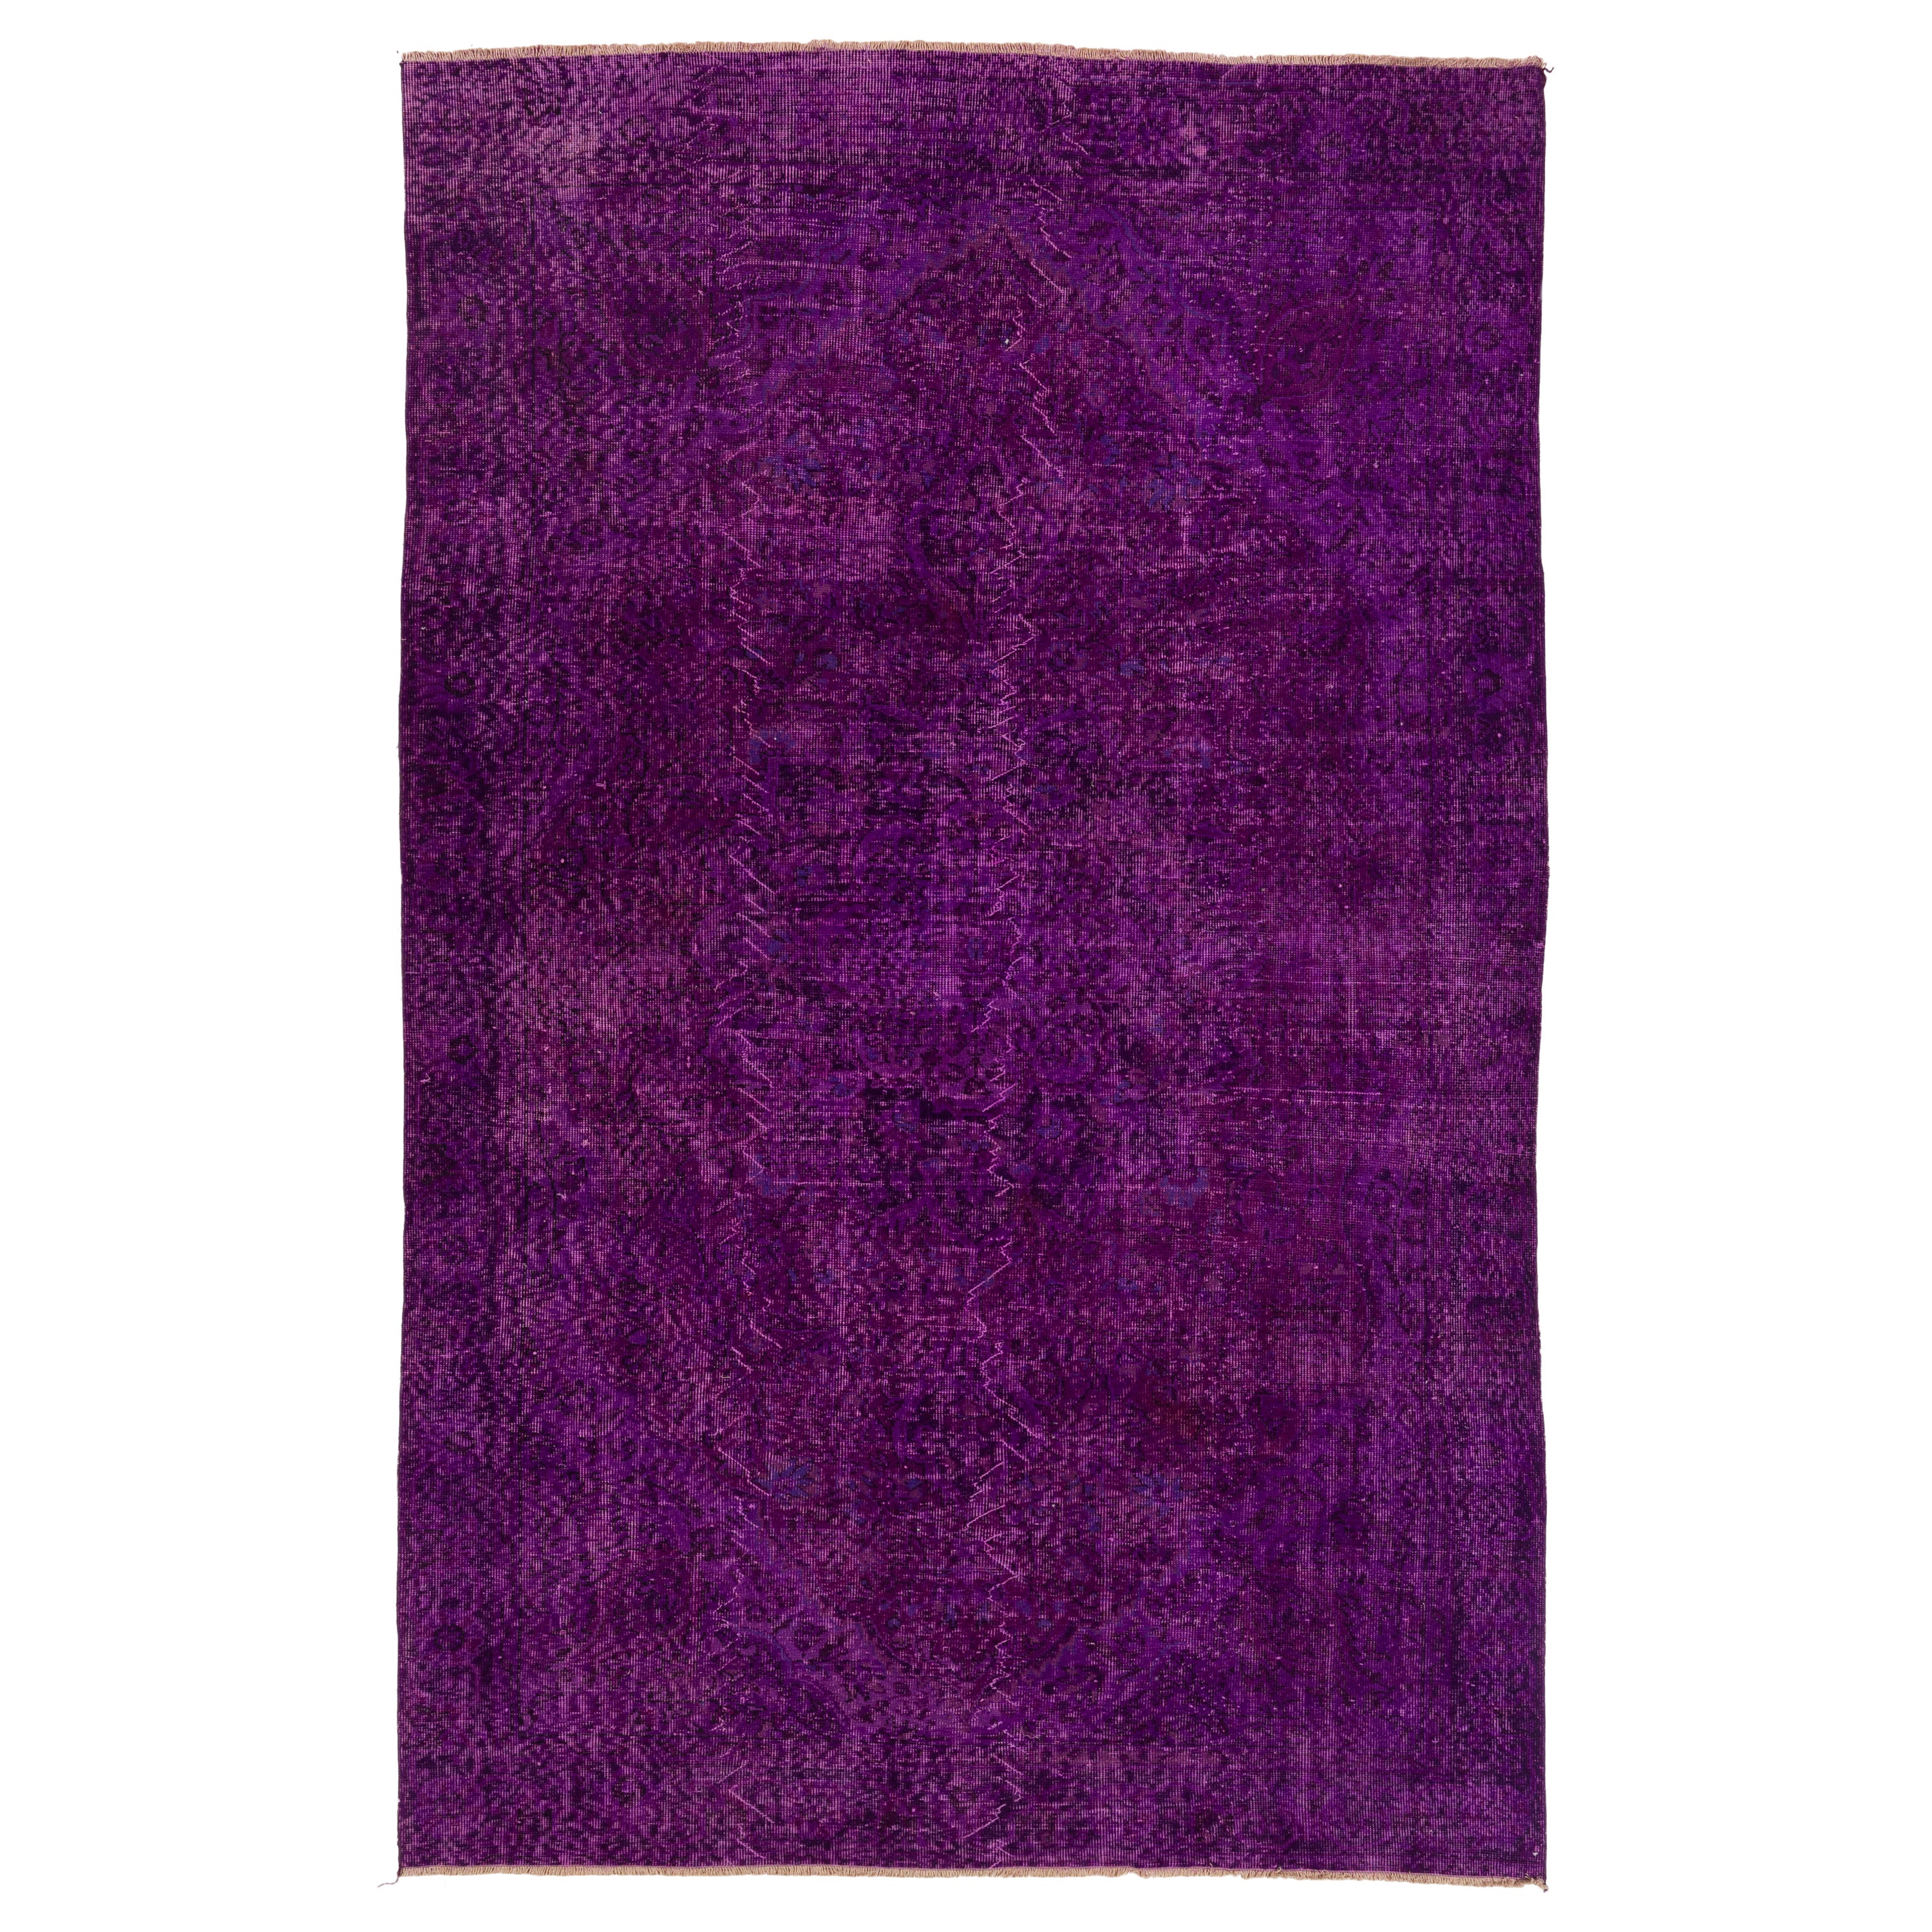 6.4x10.3 Ft Purple Handmade Turkish Area Rug, Contemporary Living Room Carpet (tapis de salon contemporain)